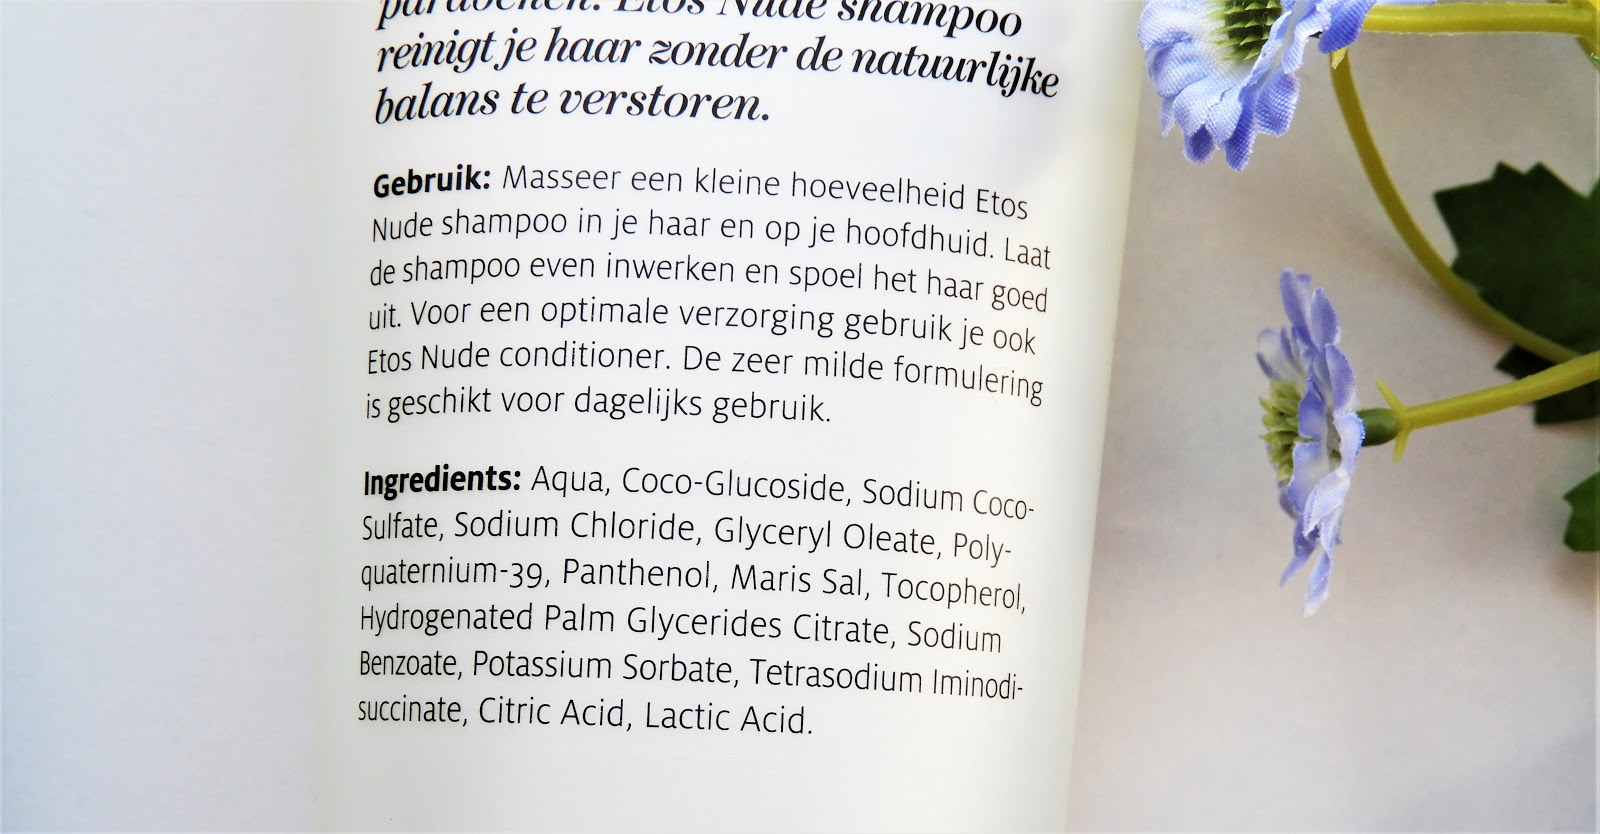 zilvershampoo, nude shampoo & meer: vernieuwde Etos Irispraat.nl